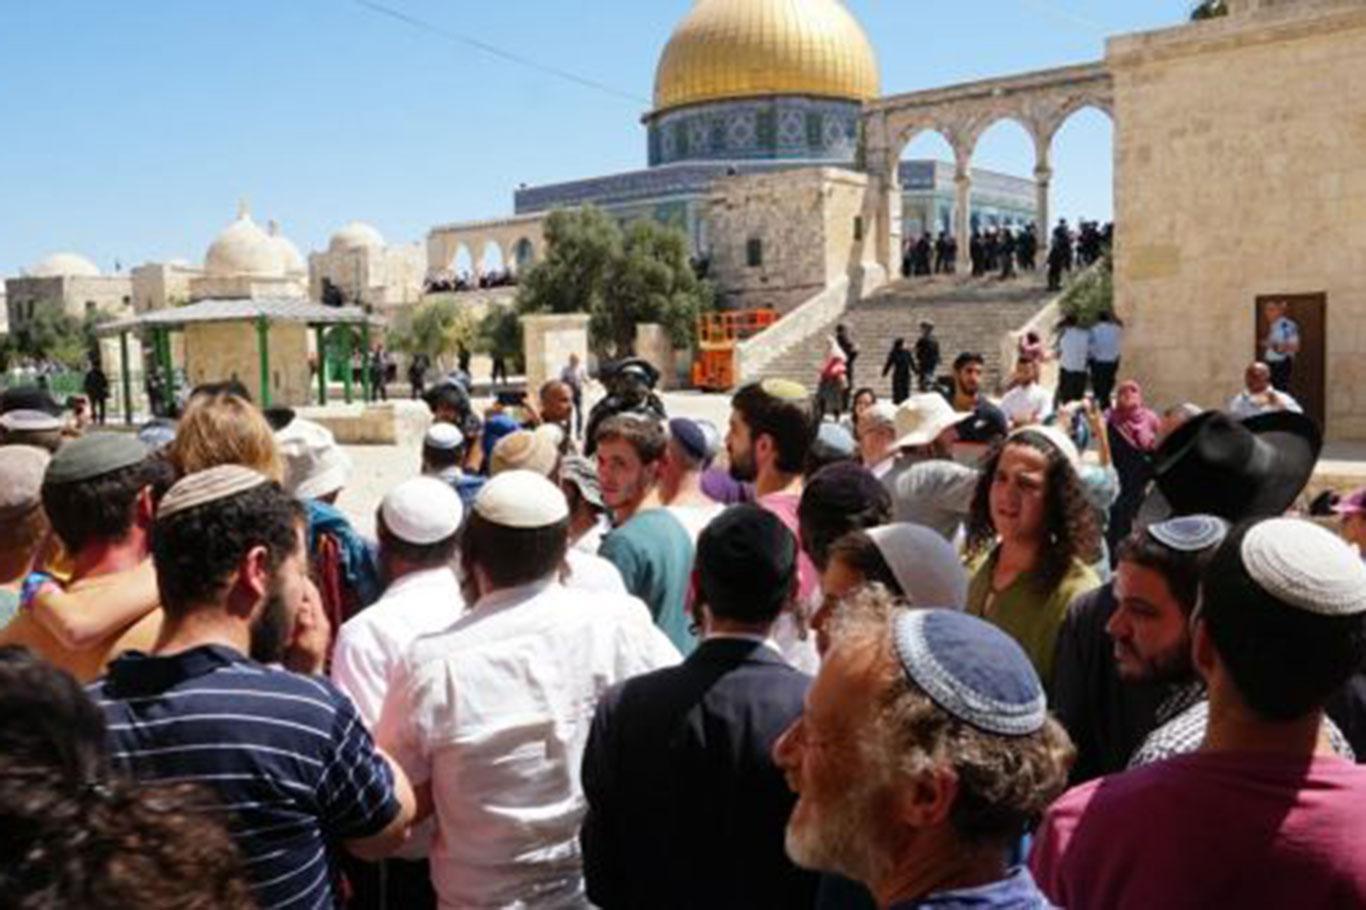 Rabbi Glick, scores of zionist settlers defile Aqsa Mosque